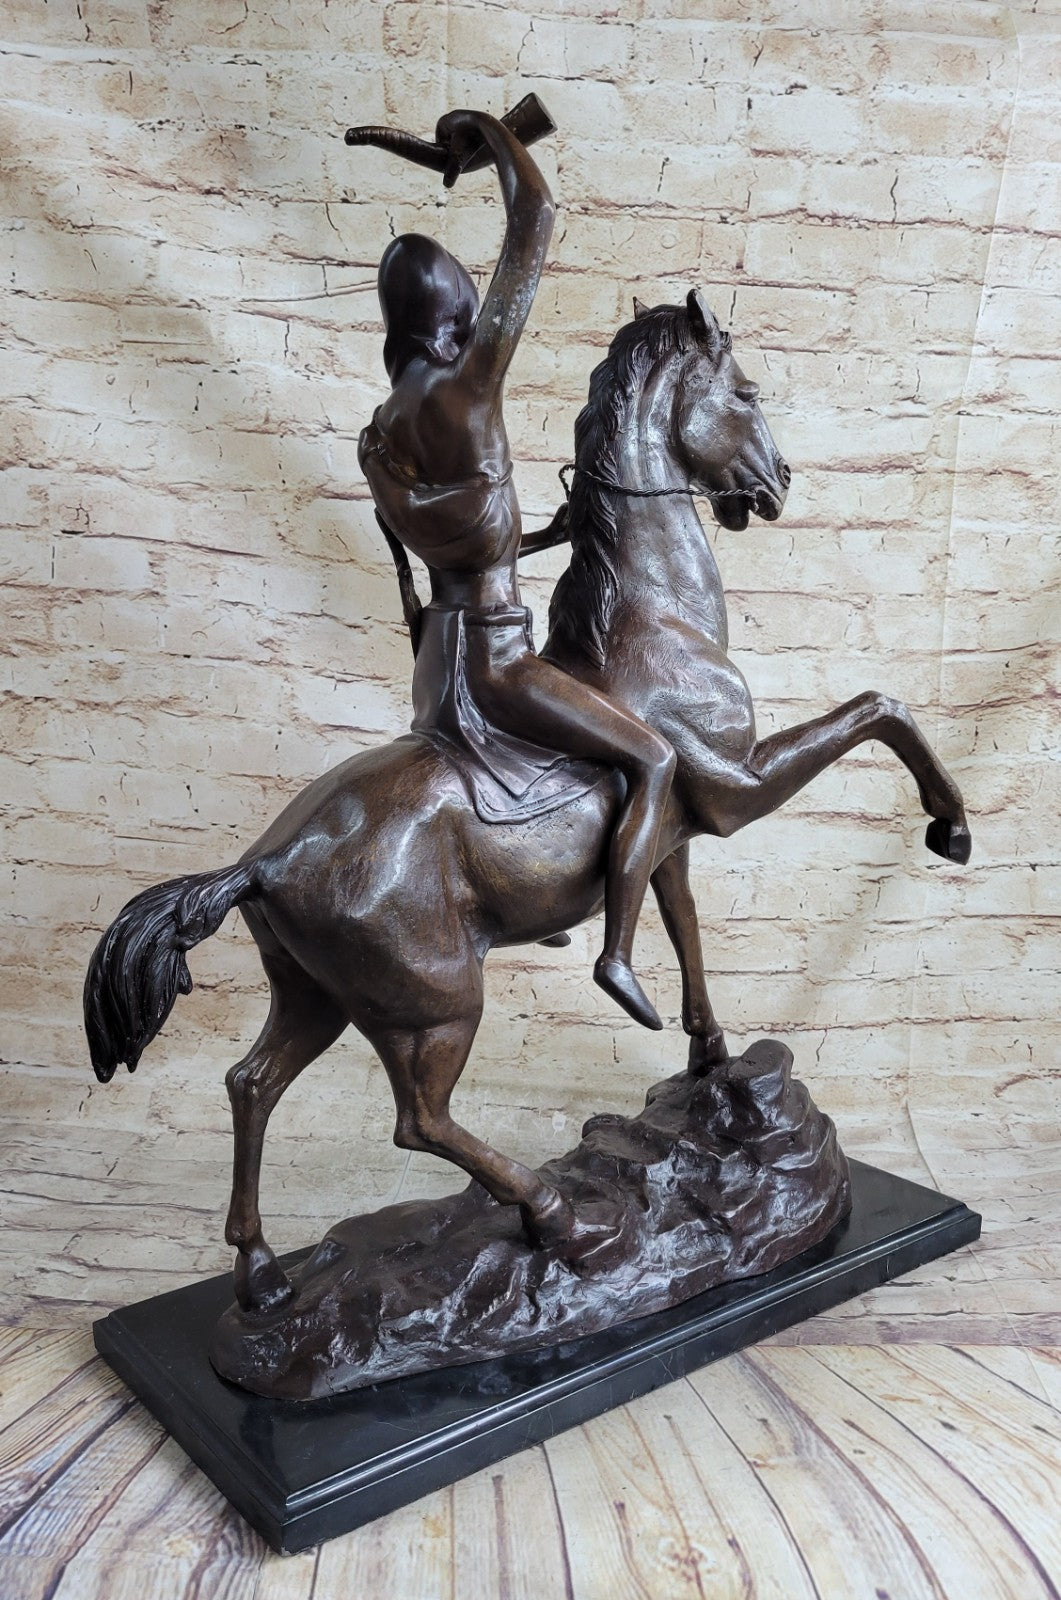 Frederic Remington Bronze Statue The Scalp fourth sculpture Figurine Figure Art